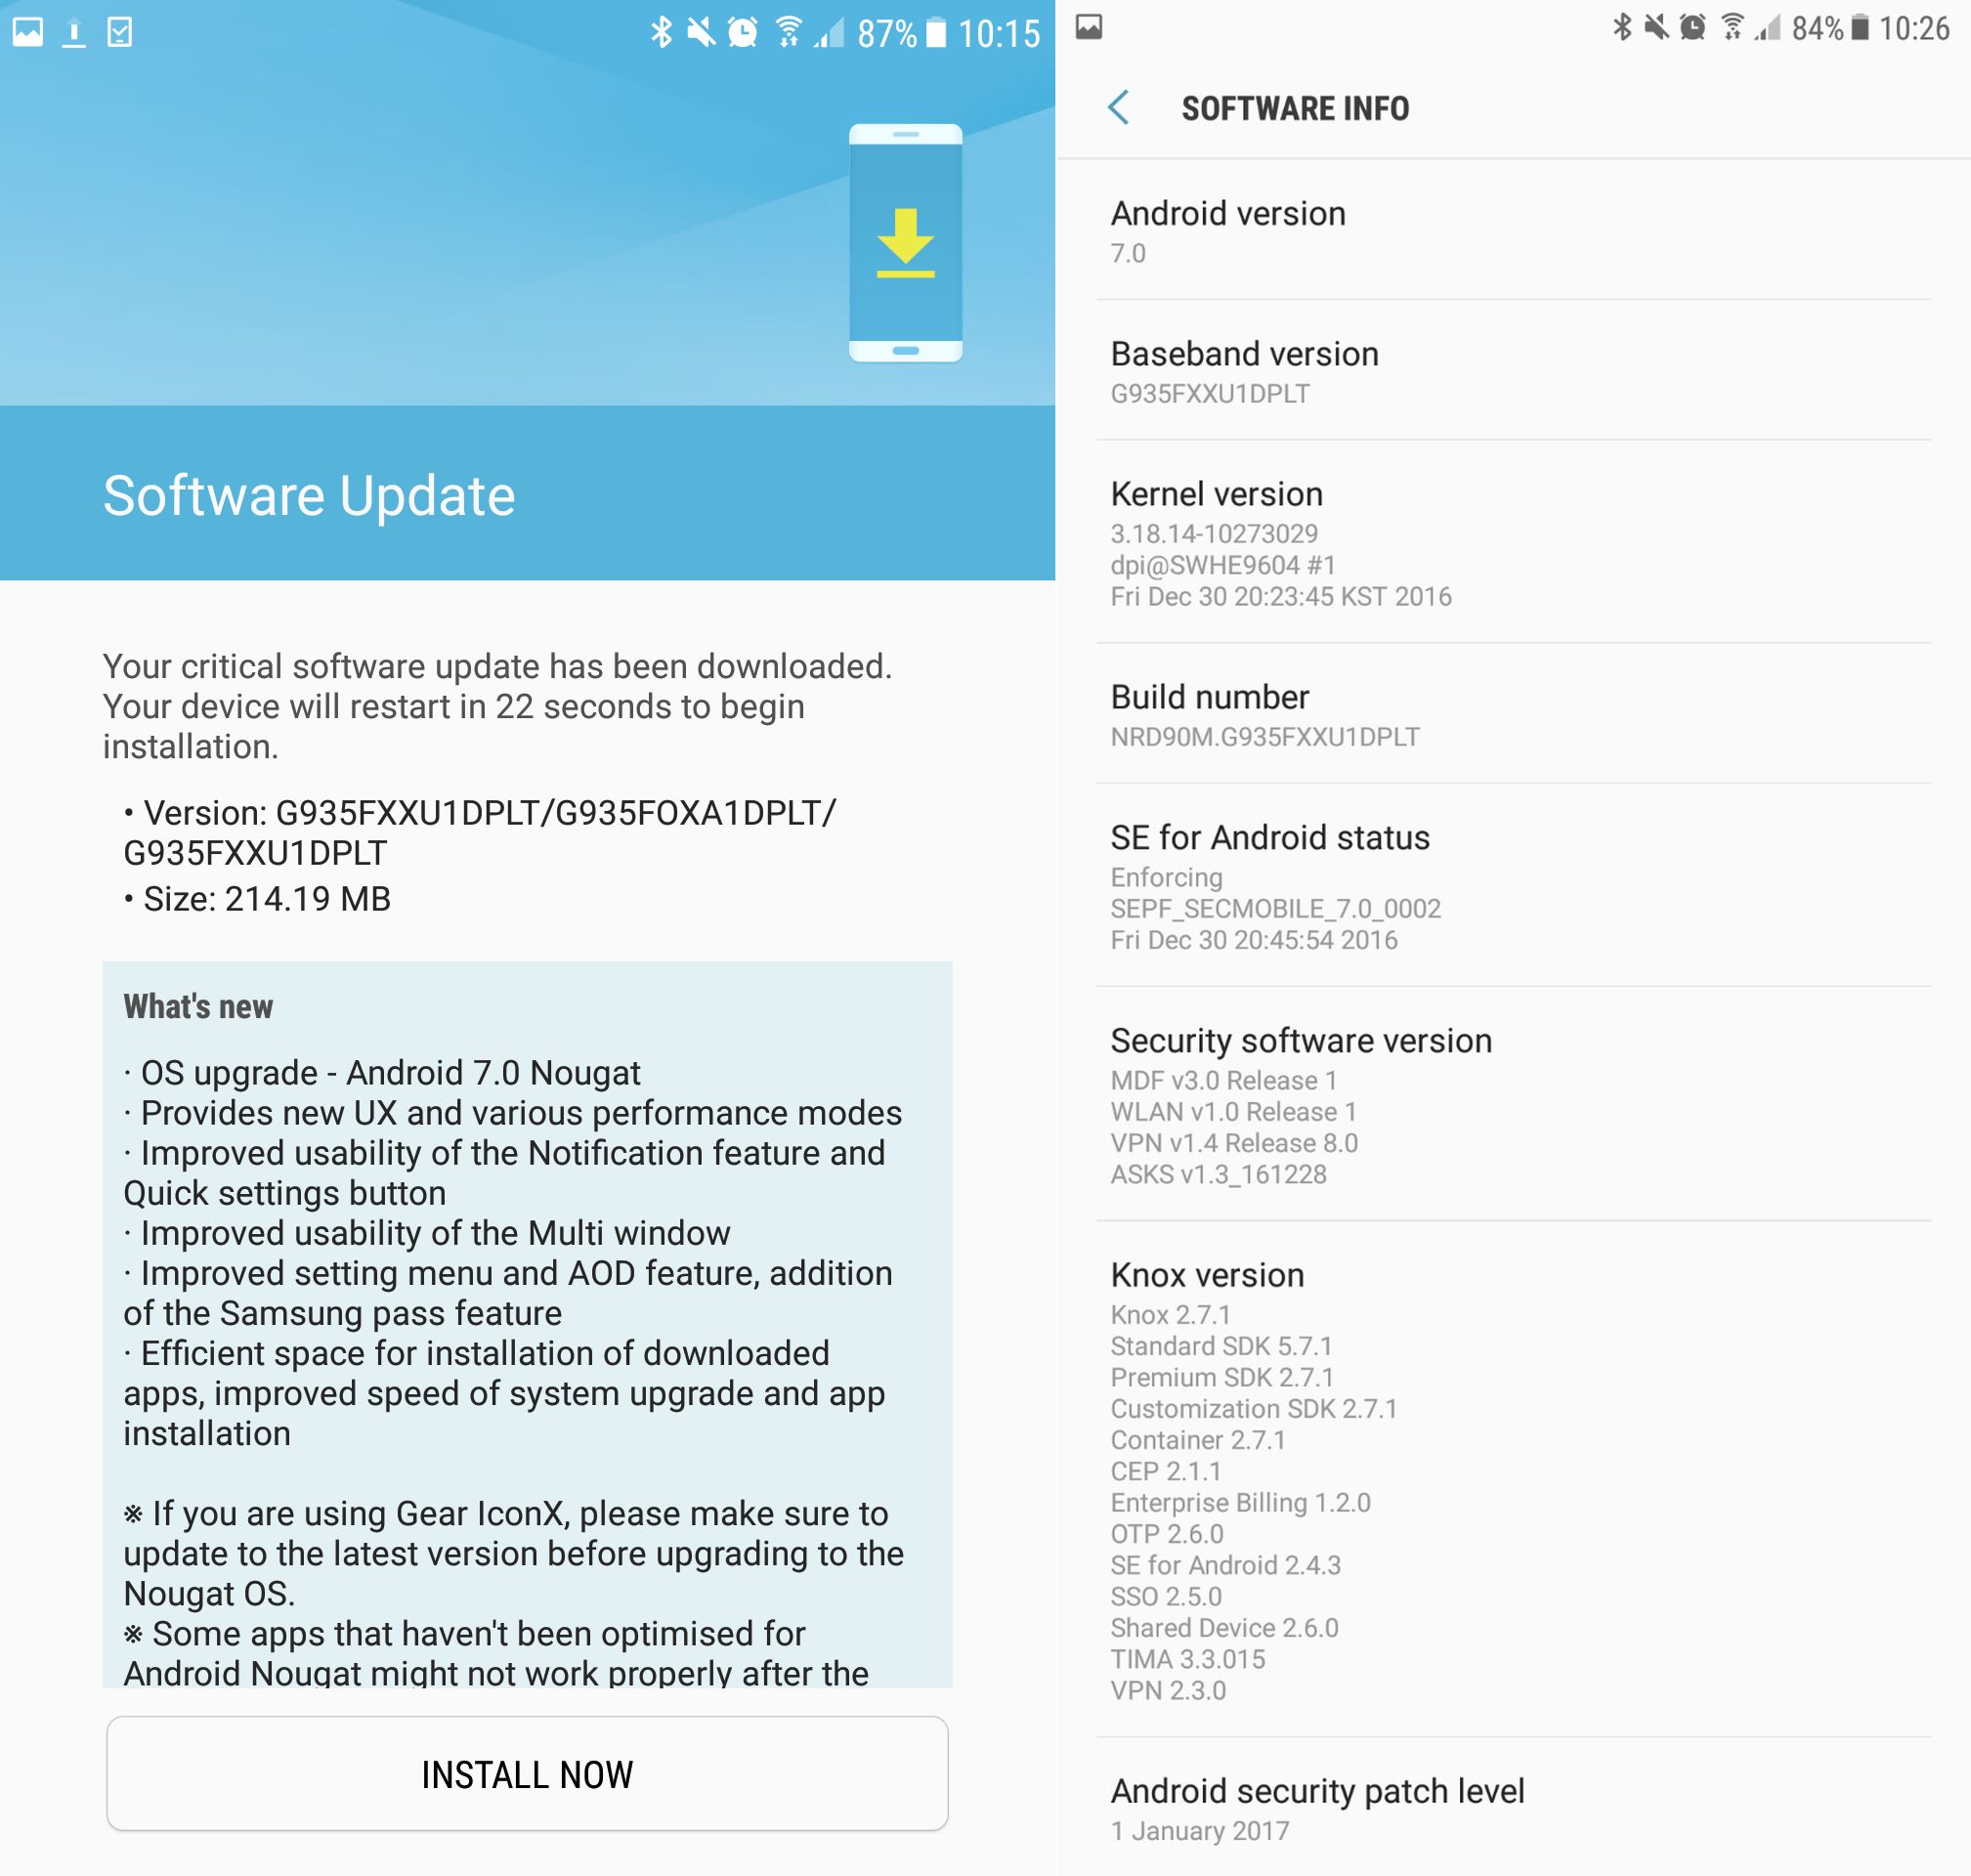 Galaxy S7 e Galaxy S7 Edge Android Nougat